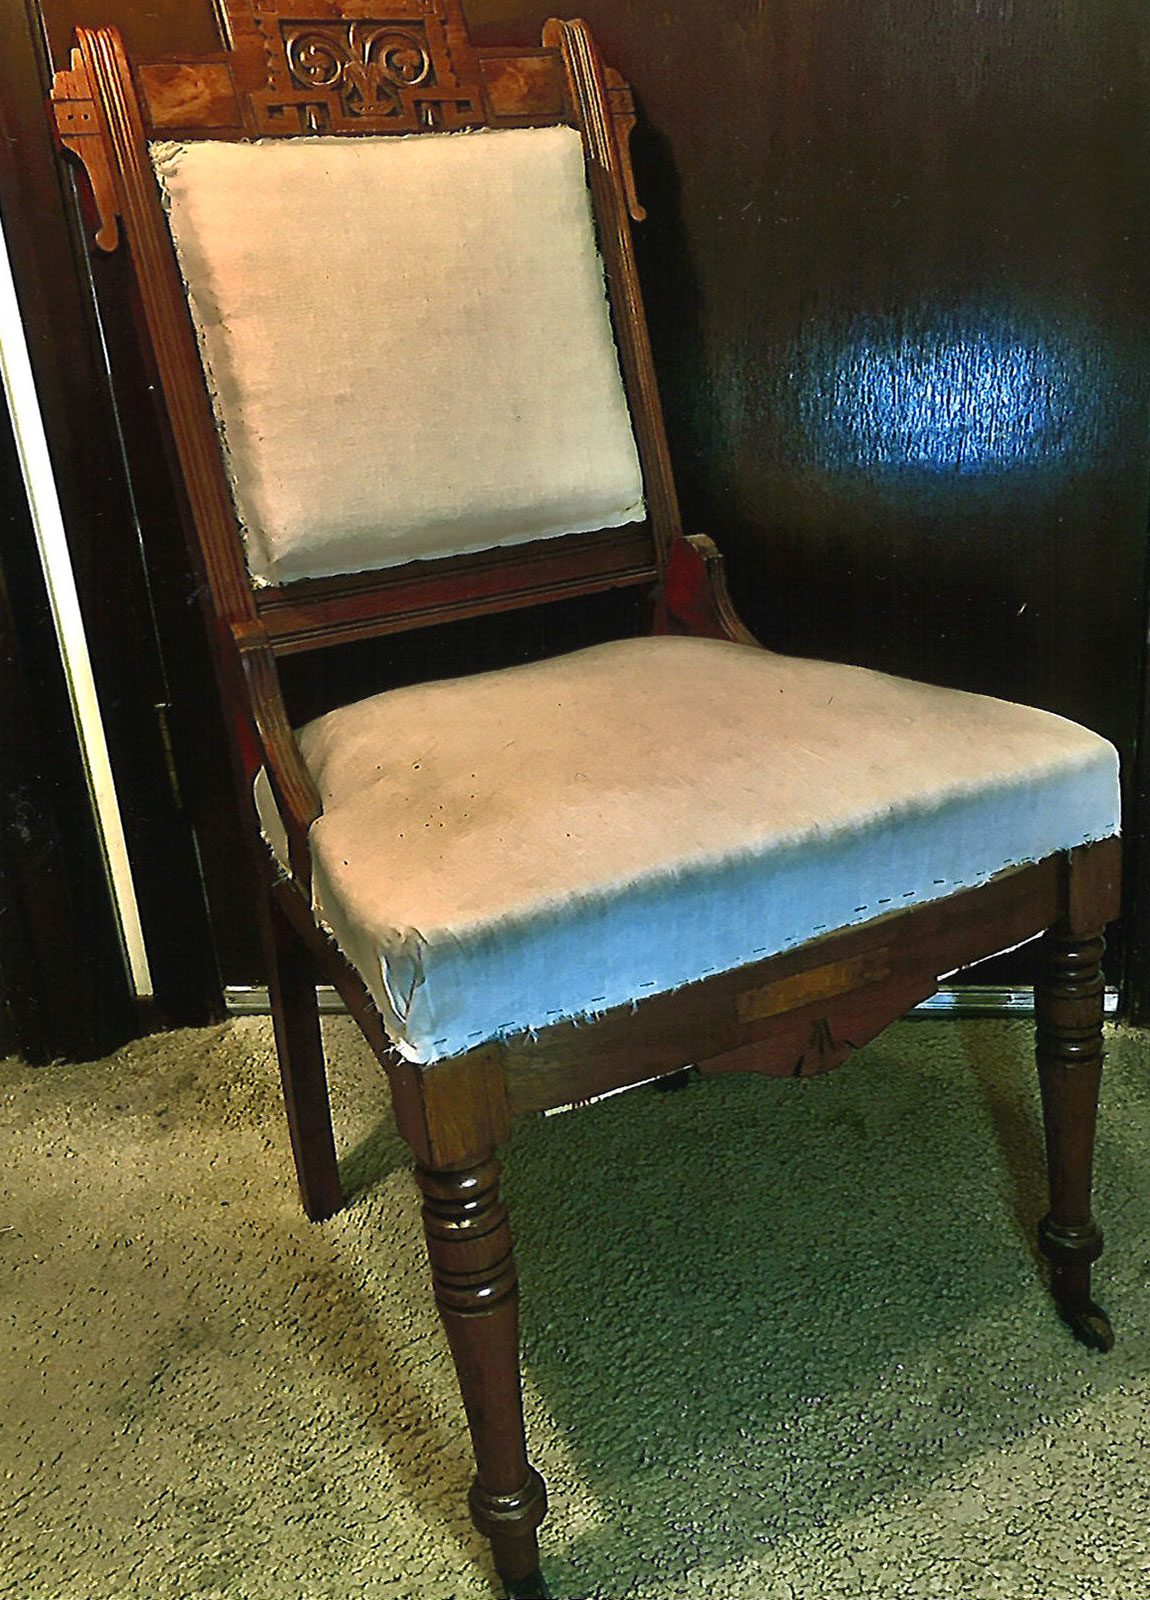 Restored white chair